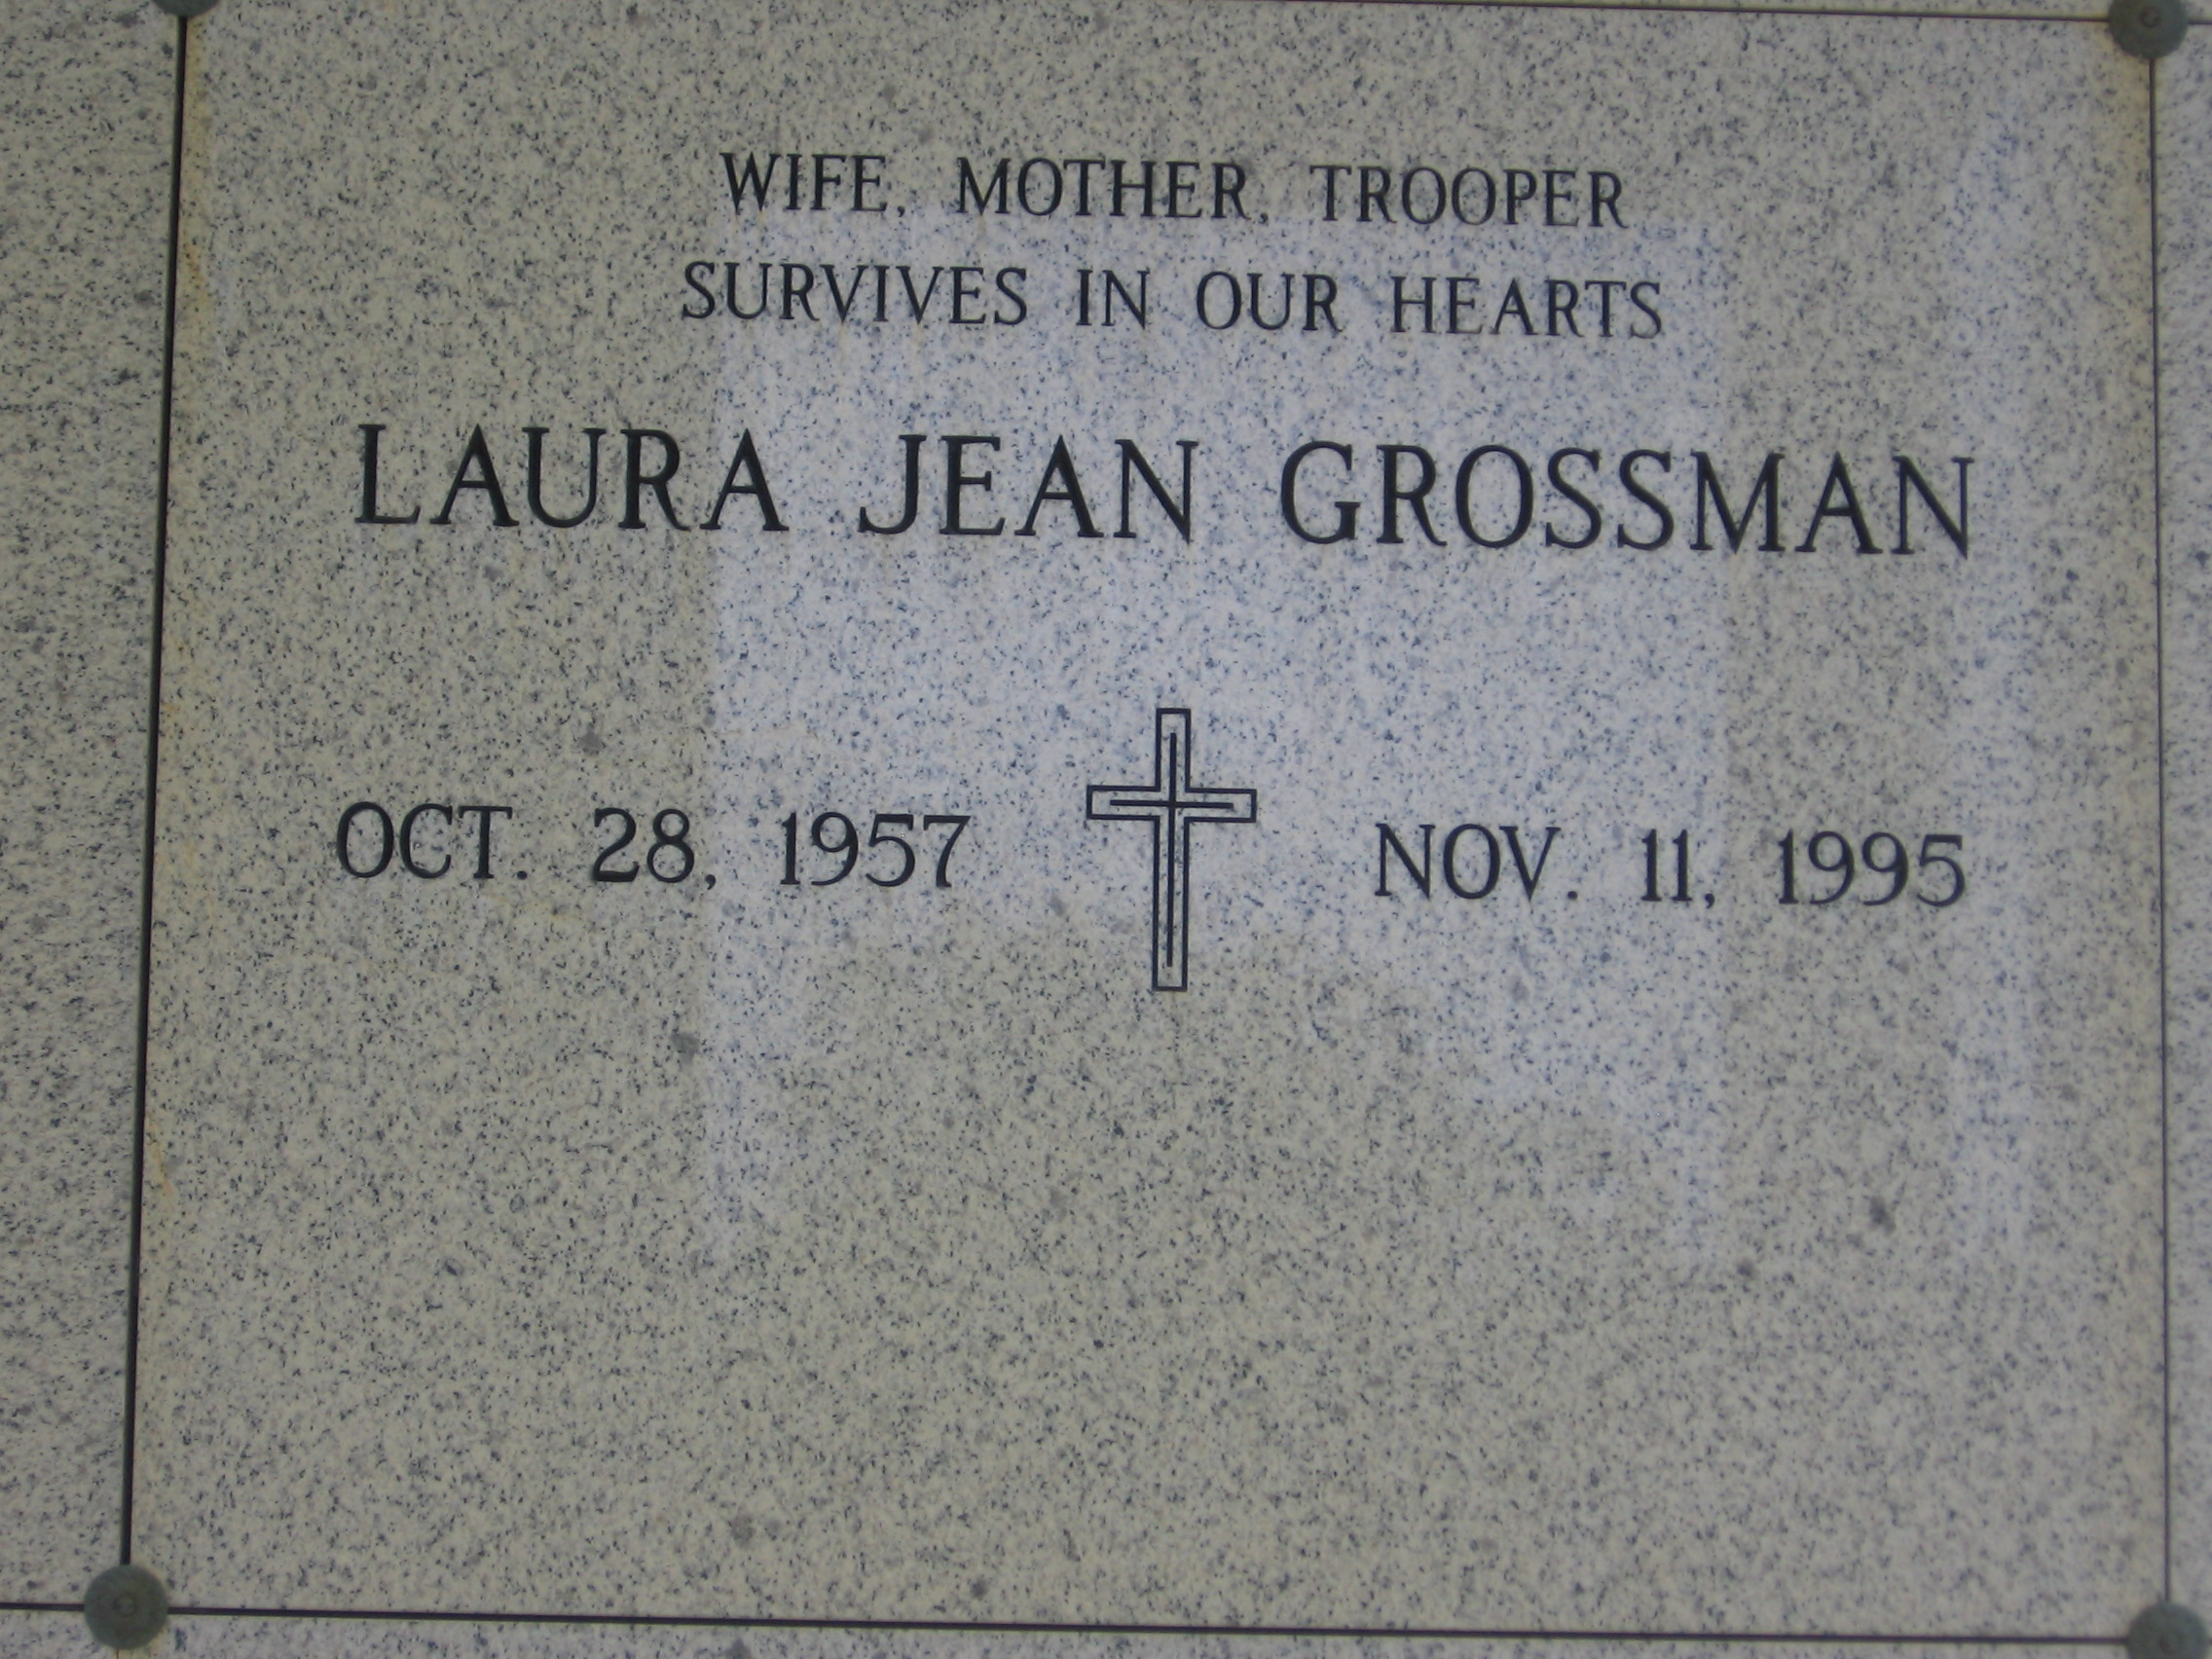 Laura Jean Grossman